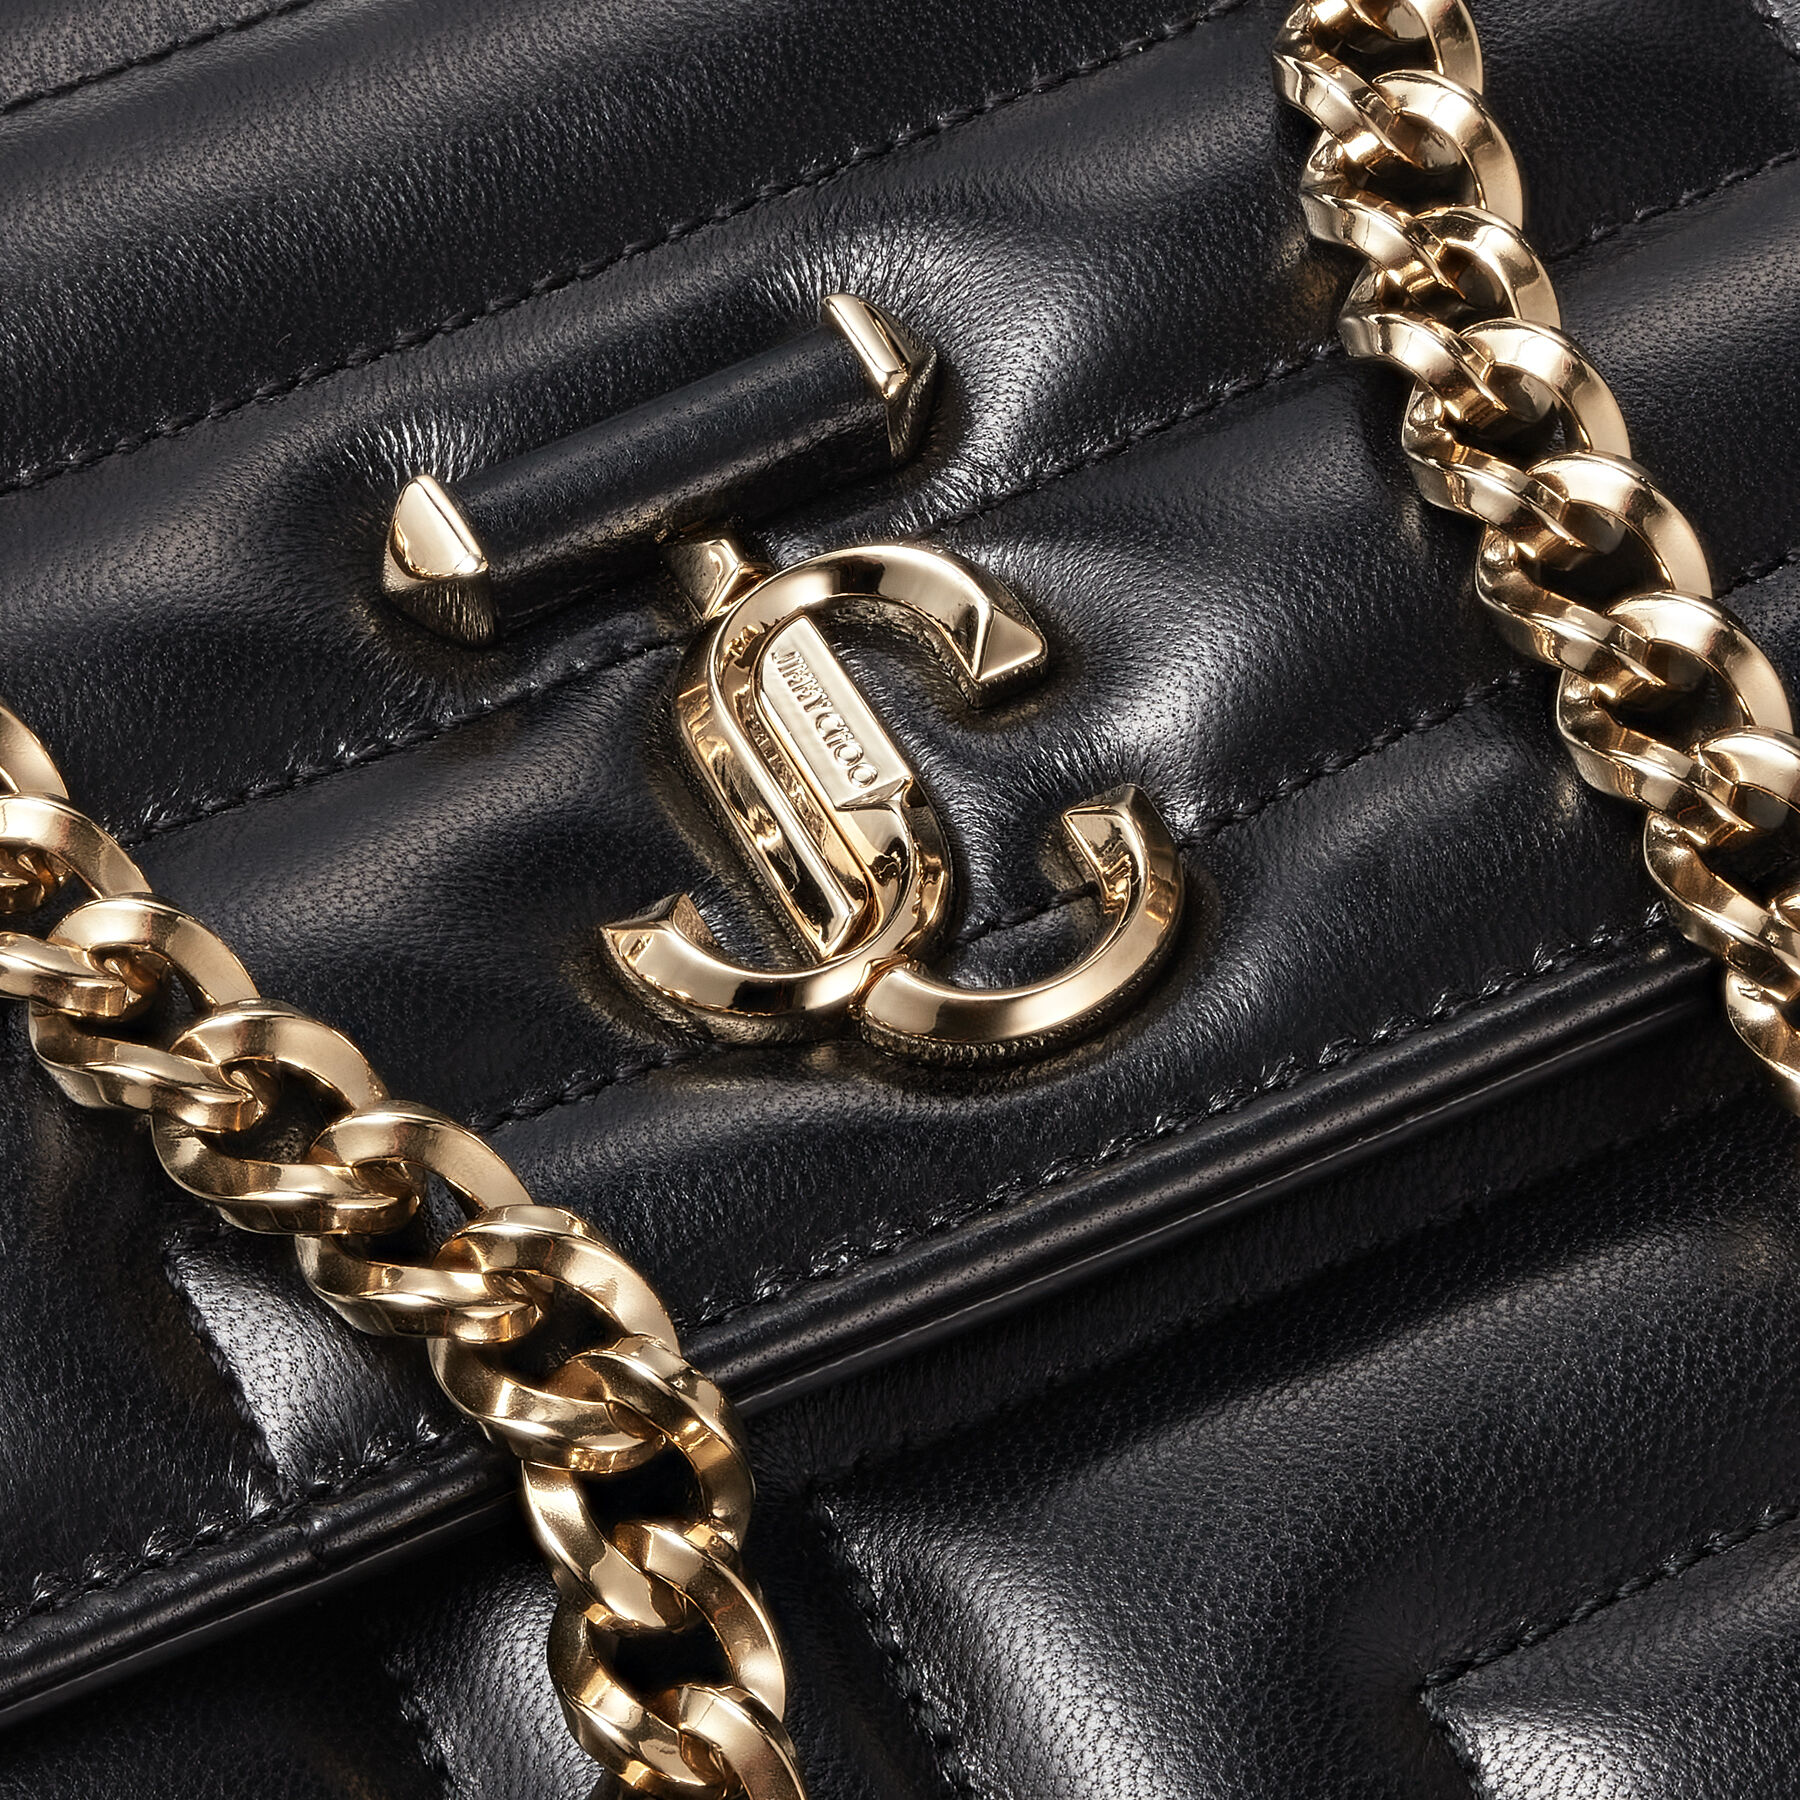 Black Nappa Nappa Leather Bag with Light Gold JC Emblem | AVENUEQUAD ...